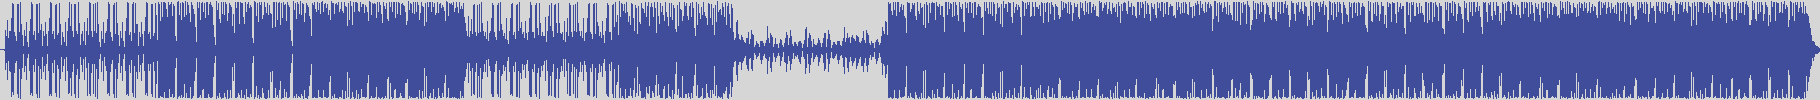 nf_boyz_records [NFY014] Jonathan Sins - Galapagos [Original Mix] audio wave form